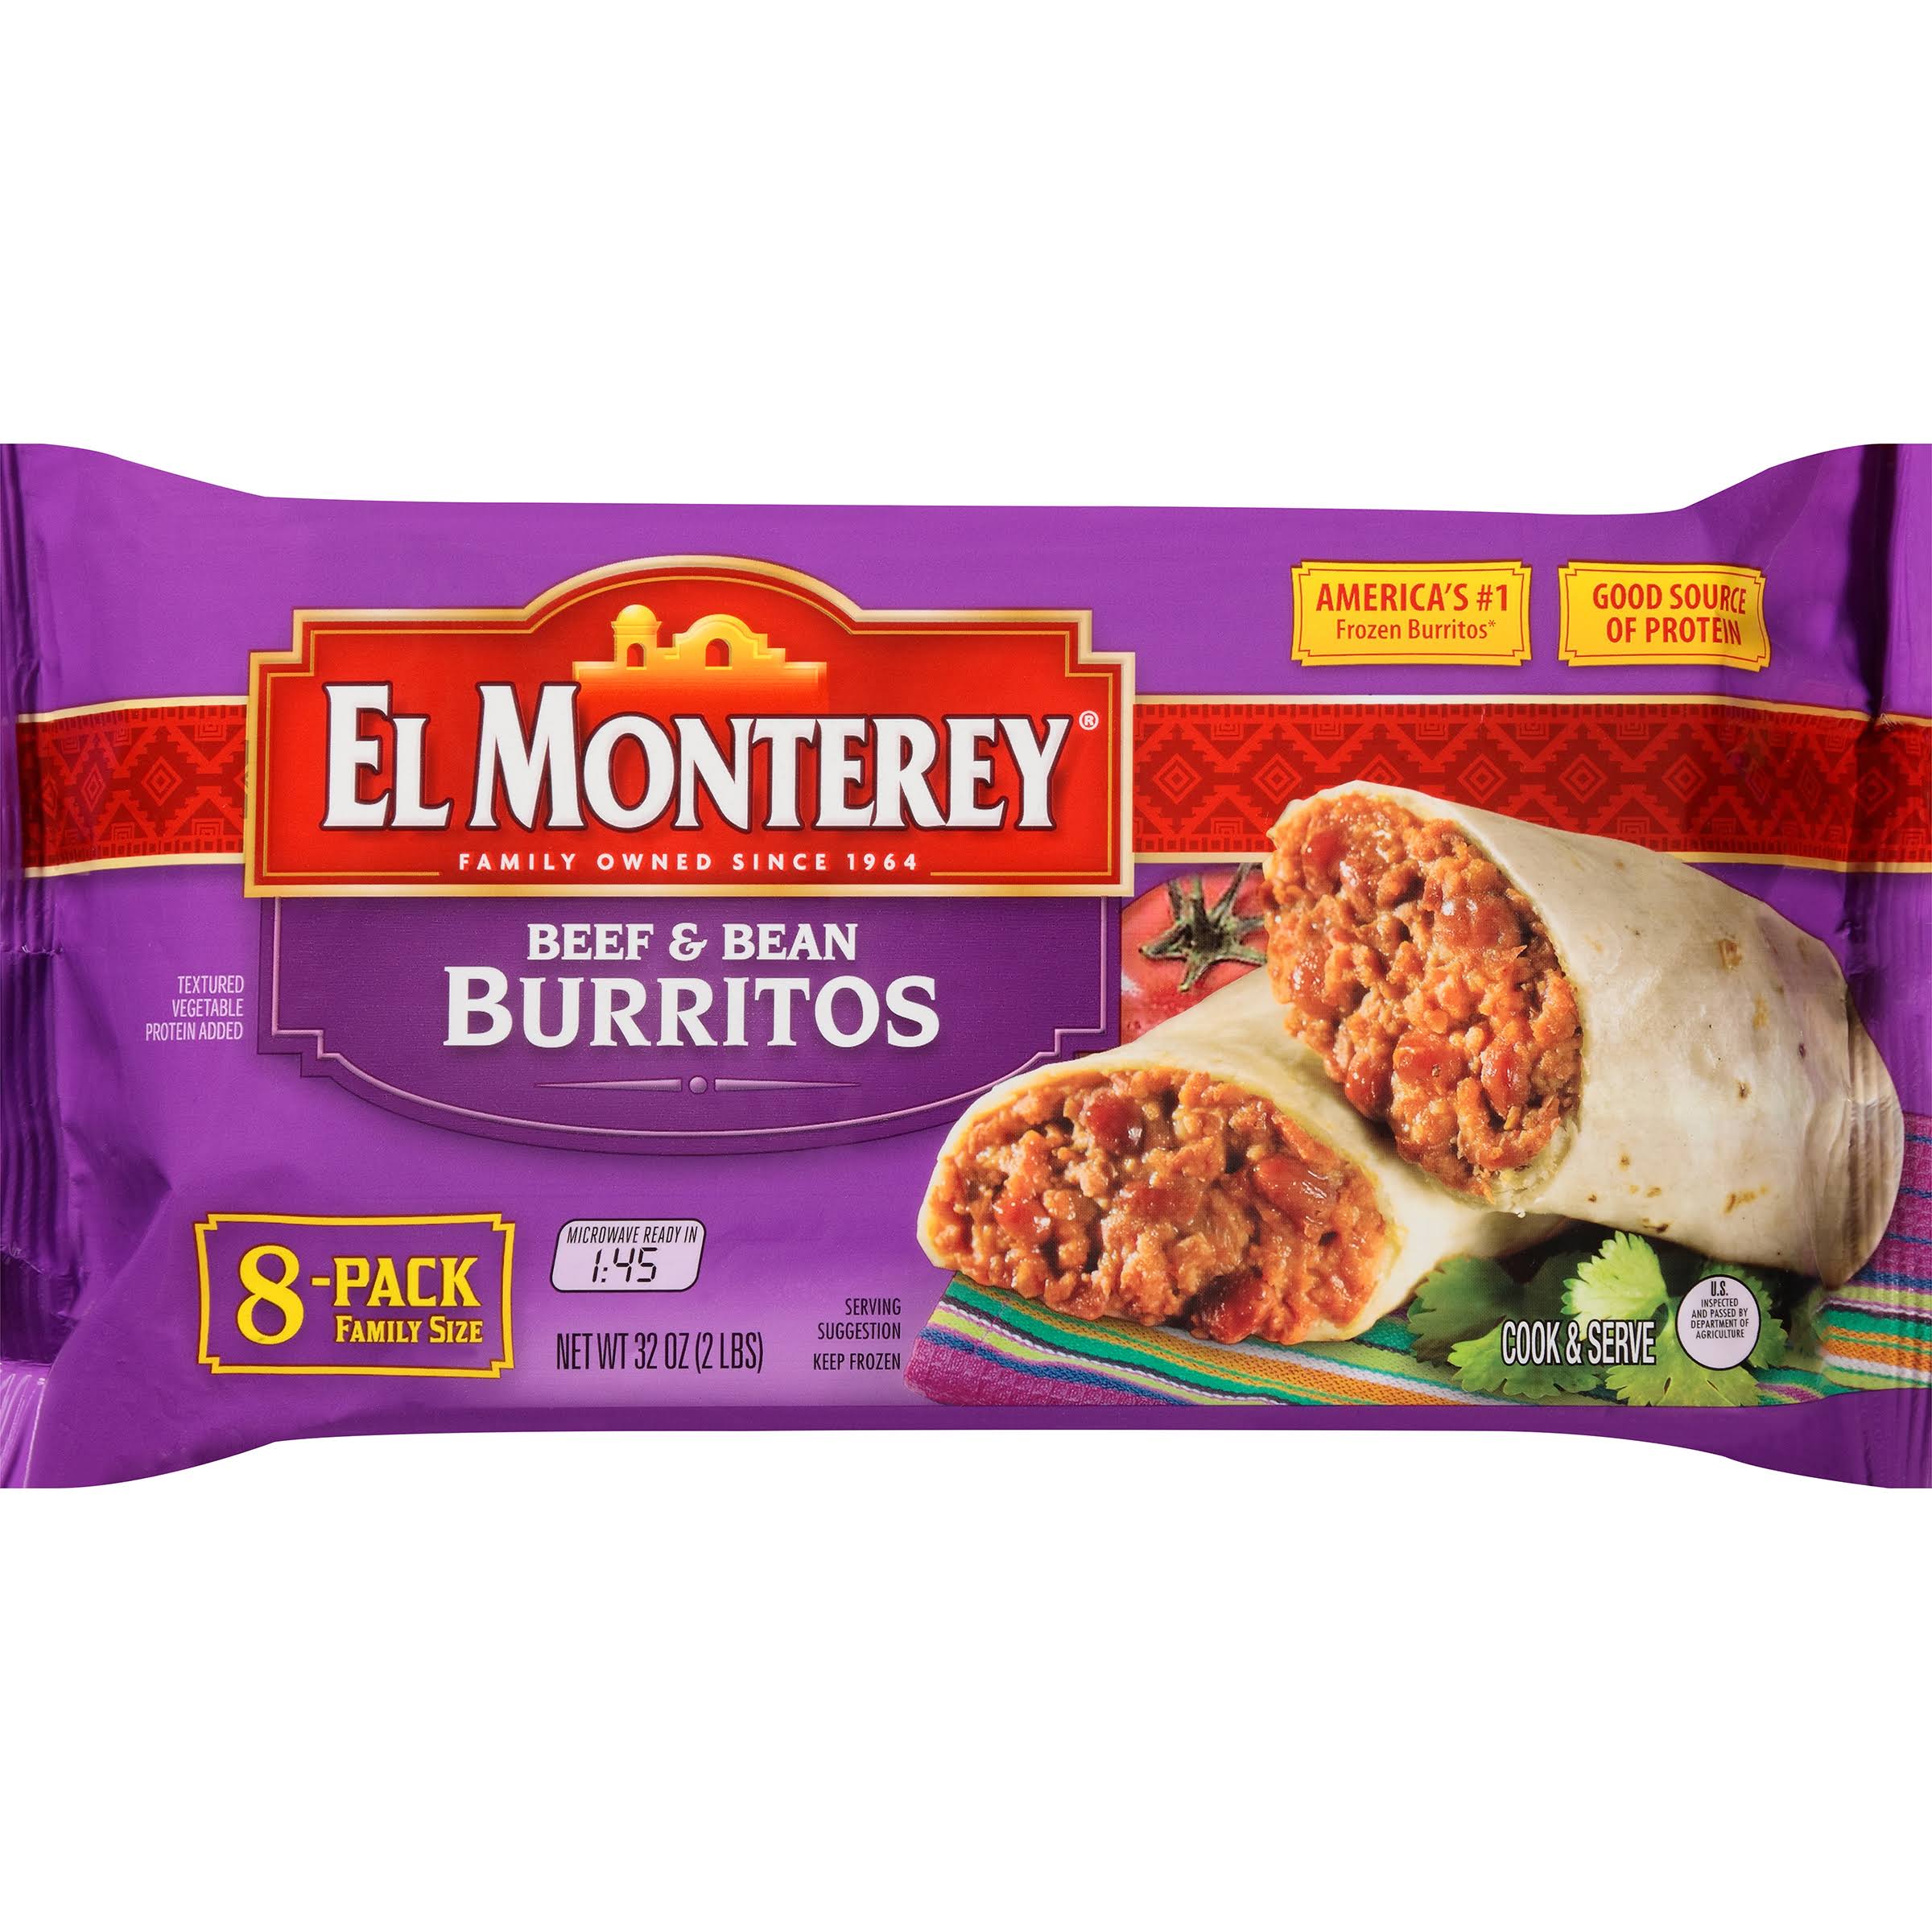 El Monterey Beef & Bean Burritos - 8 Pack